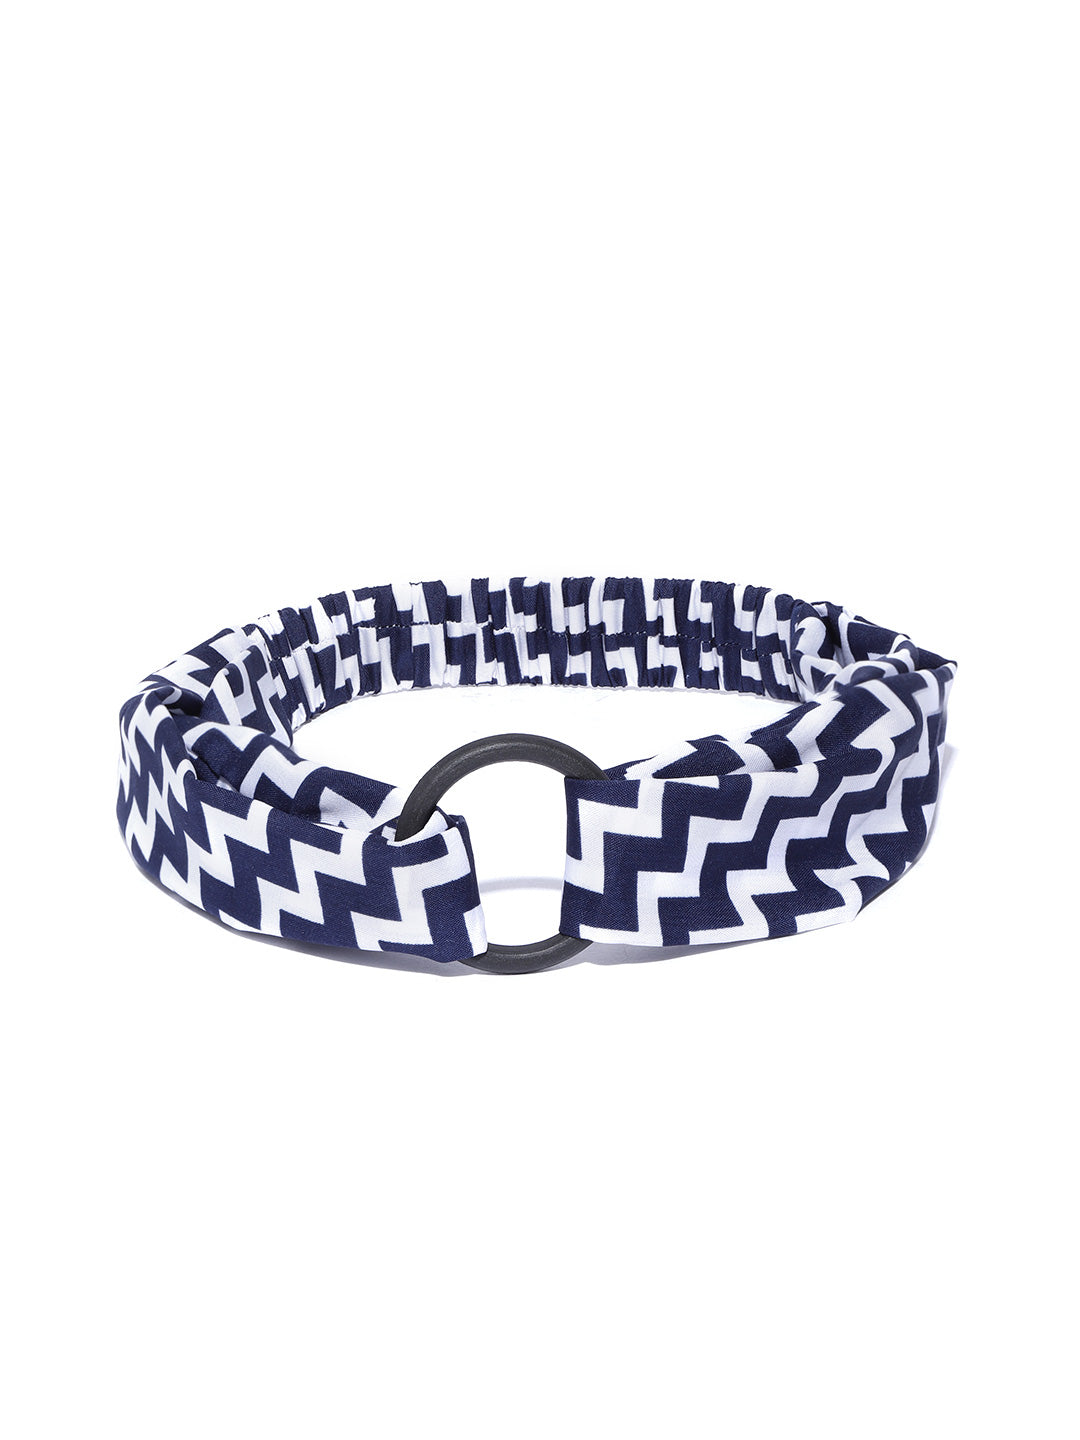 Blueberry blue & white printed hairband